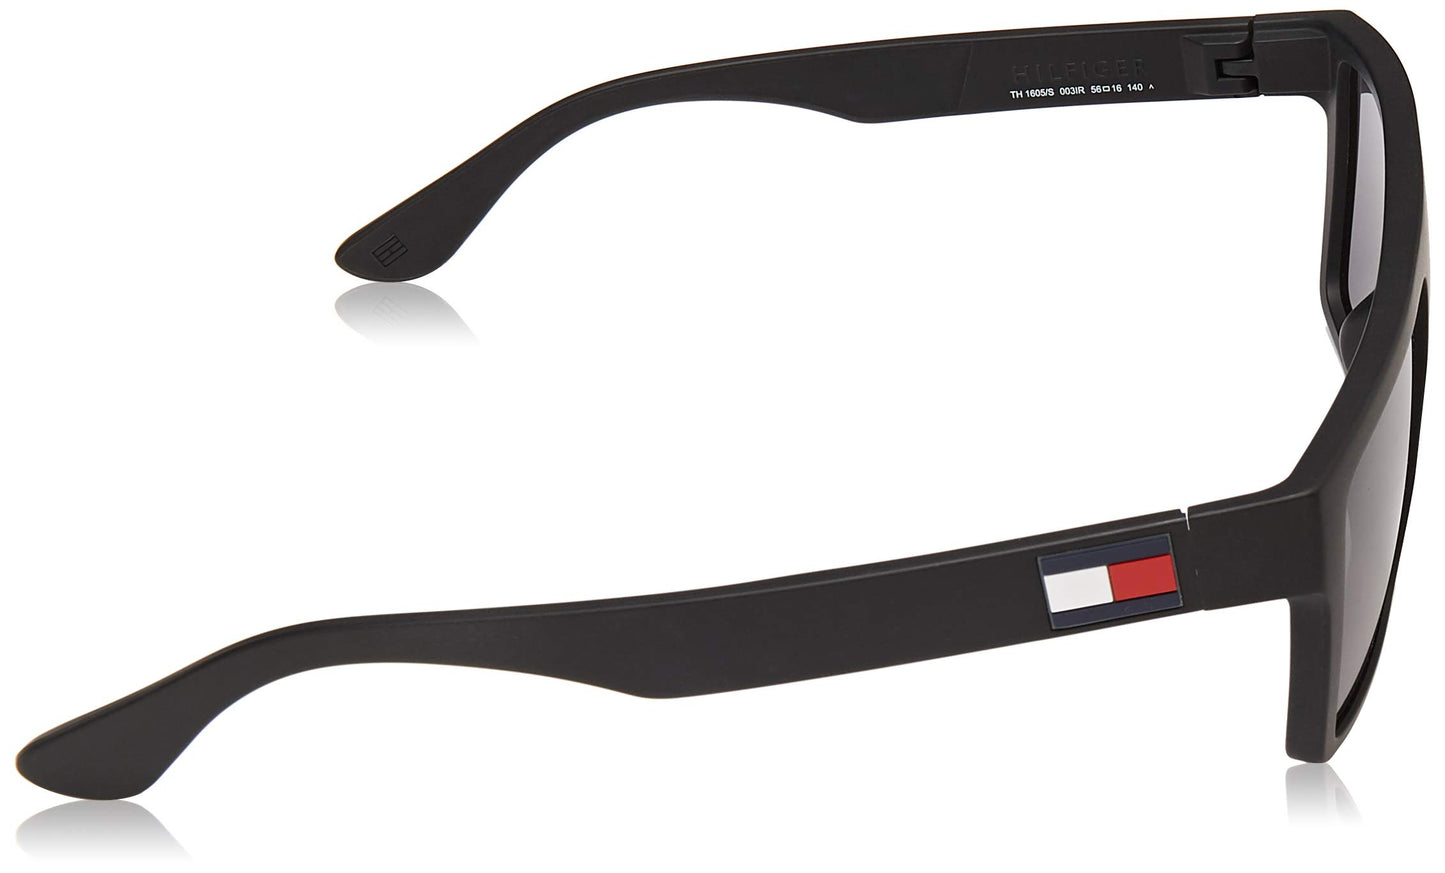 Tommy Hilfiger Men's Th1605/S Square Sunglasses